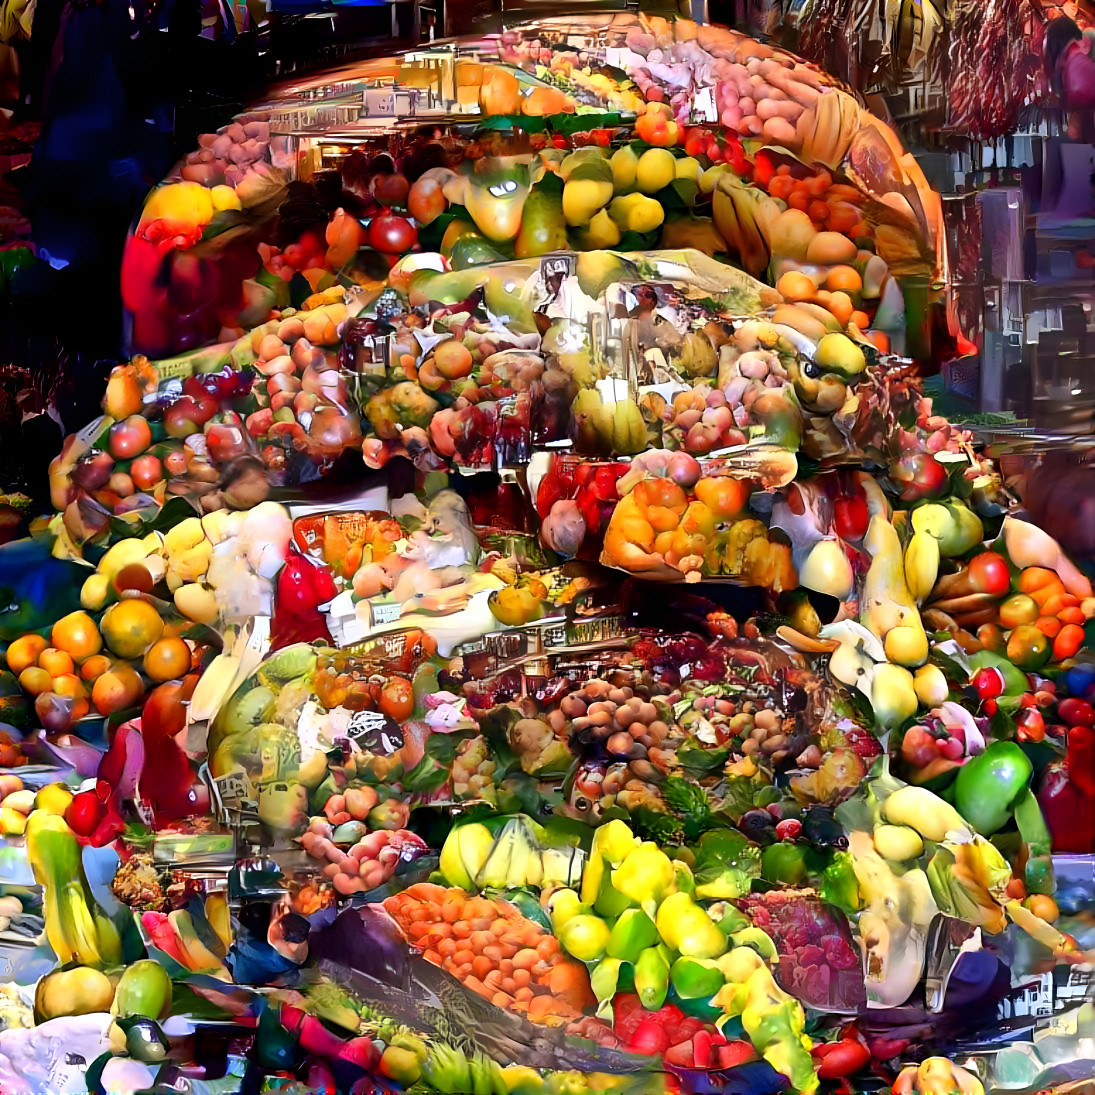 cheeseburger retextured with market display